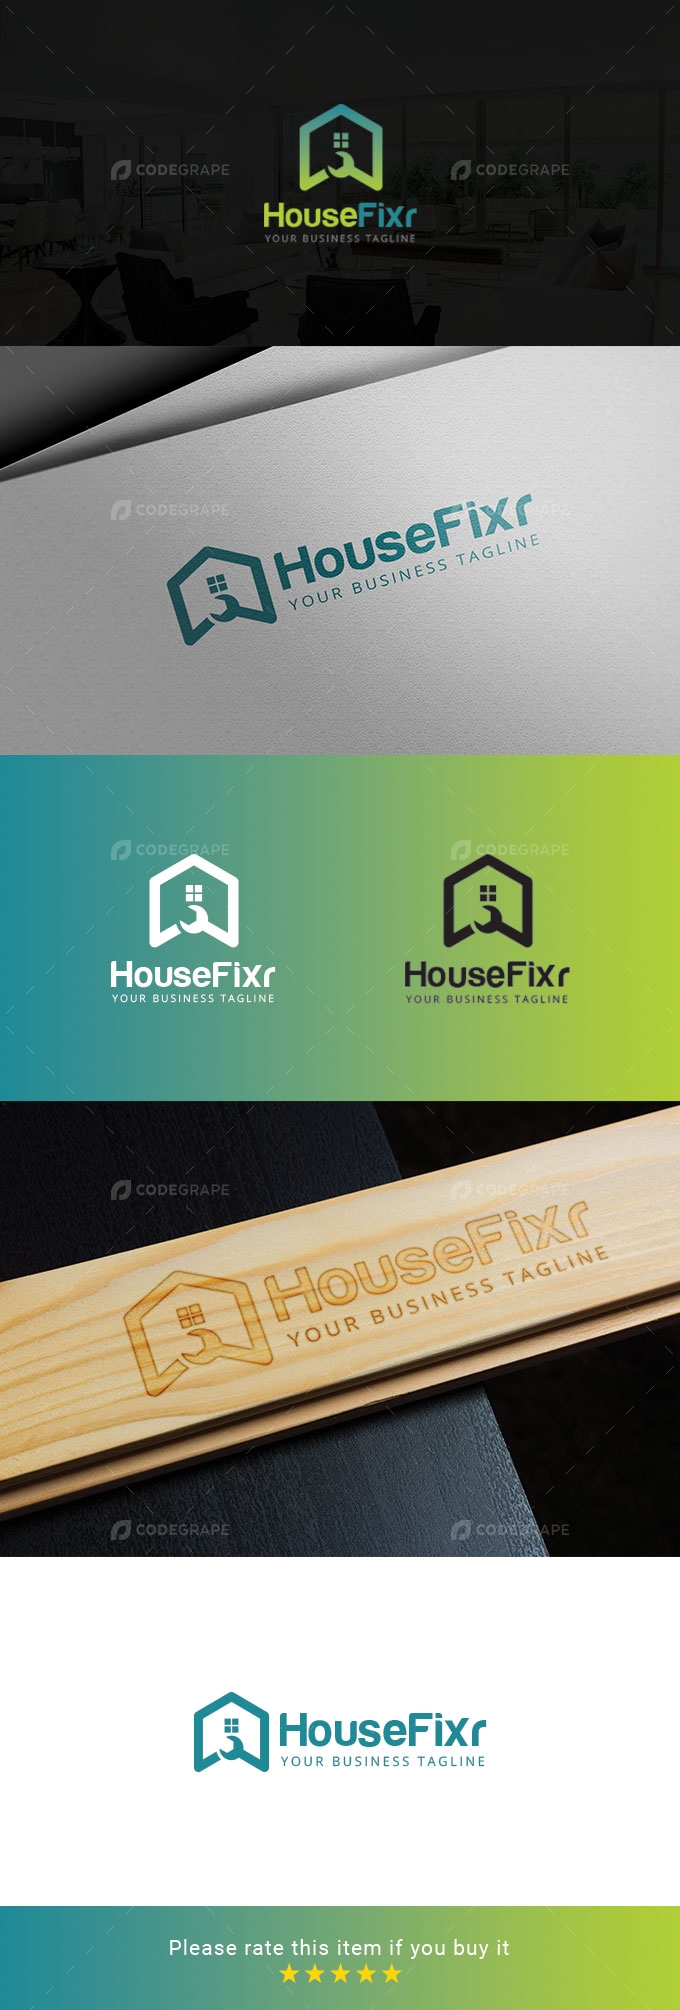 House Fixr - Services Logo